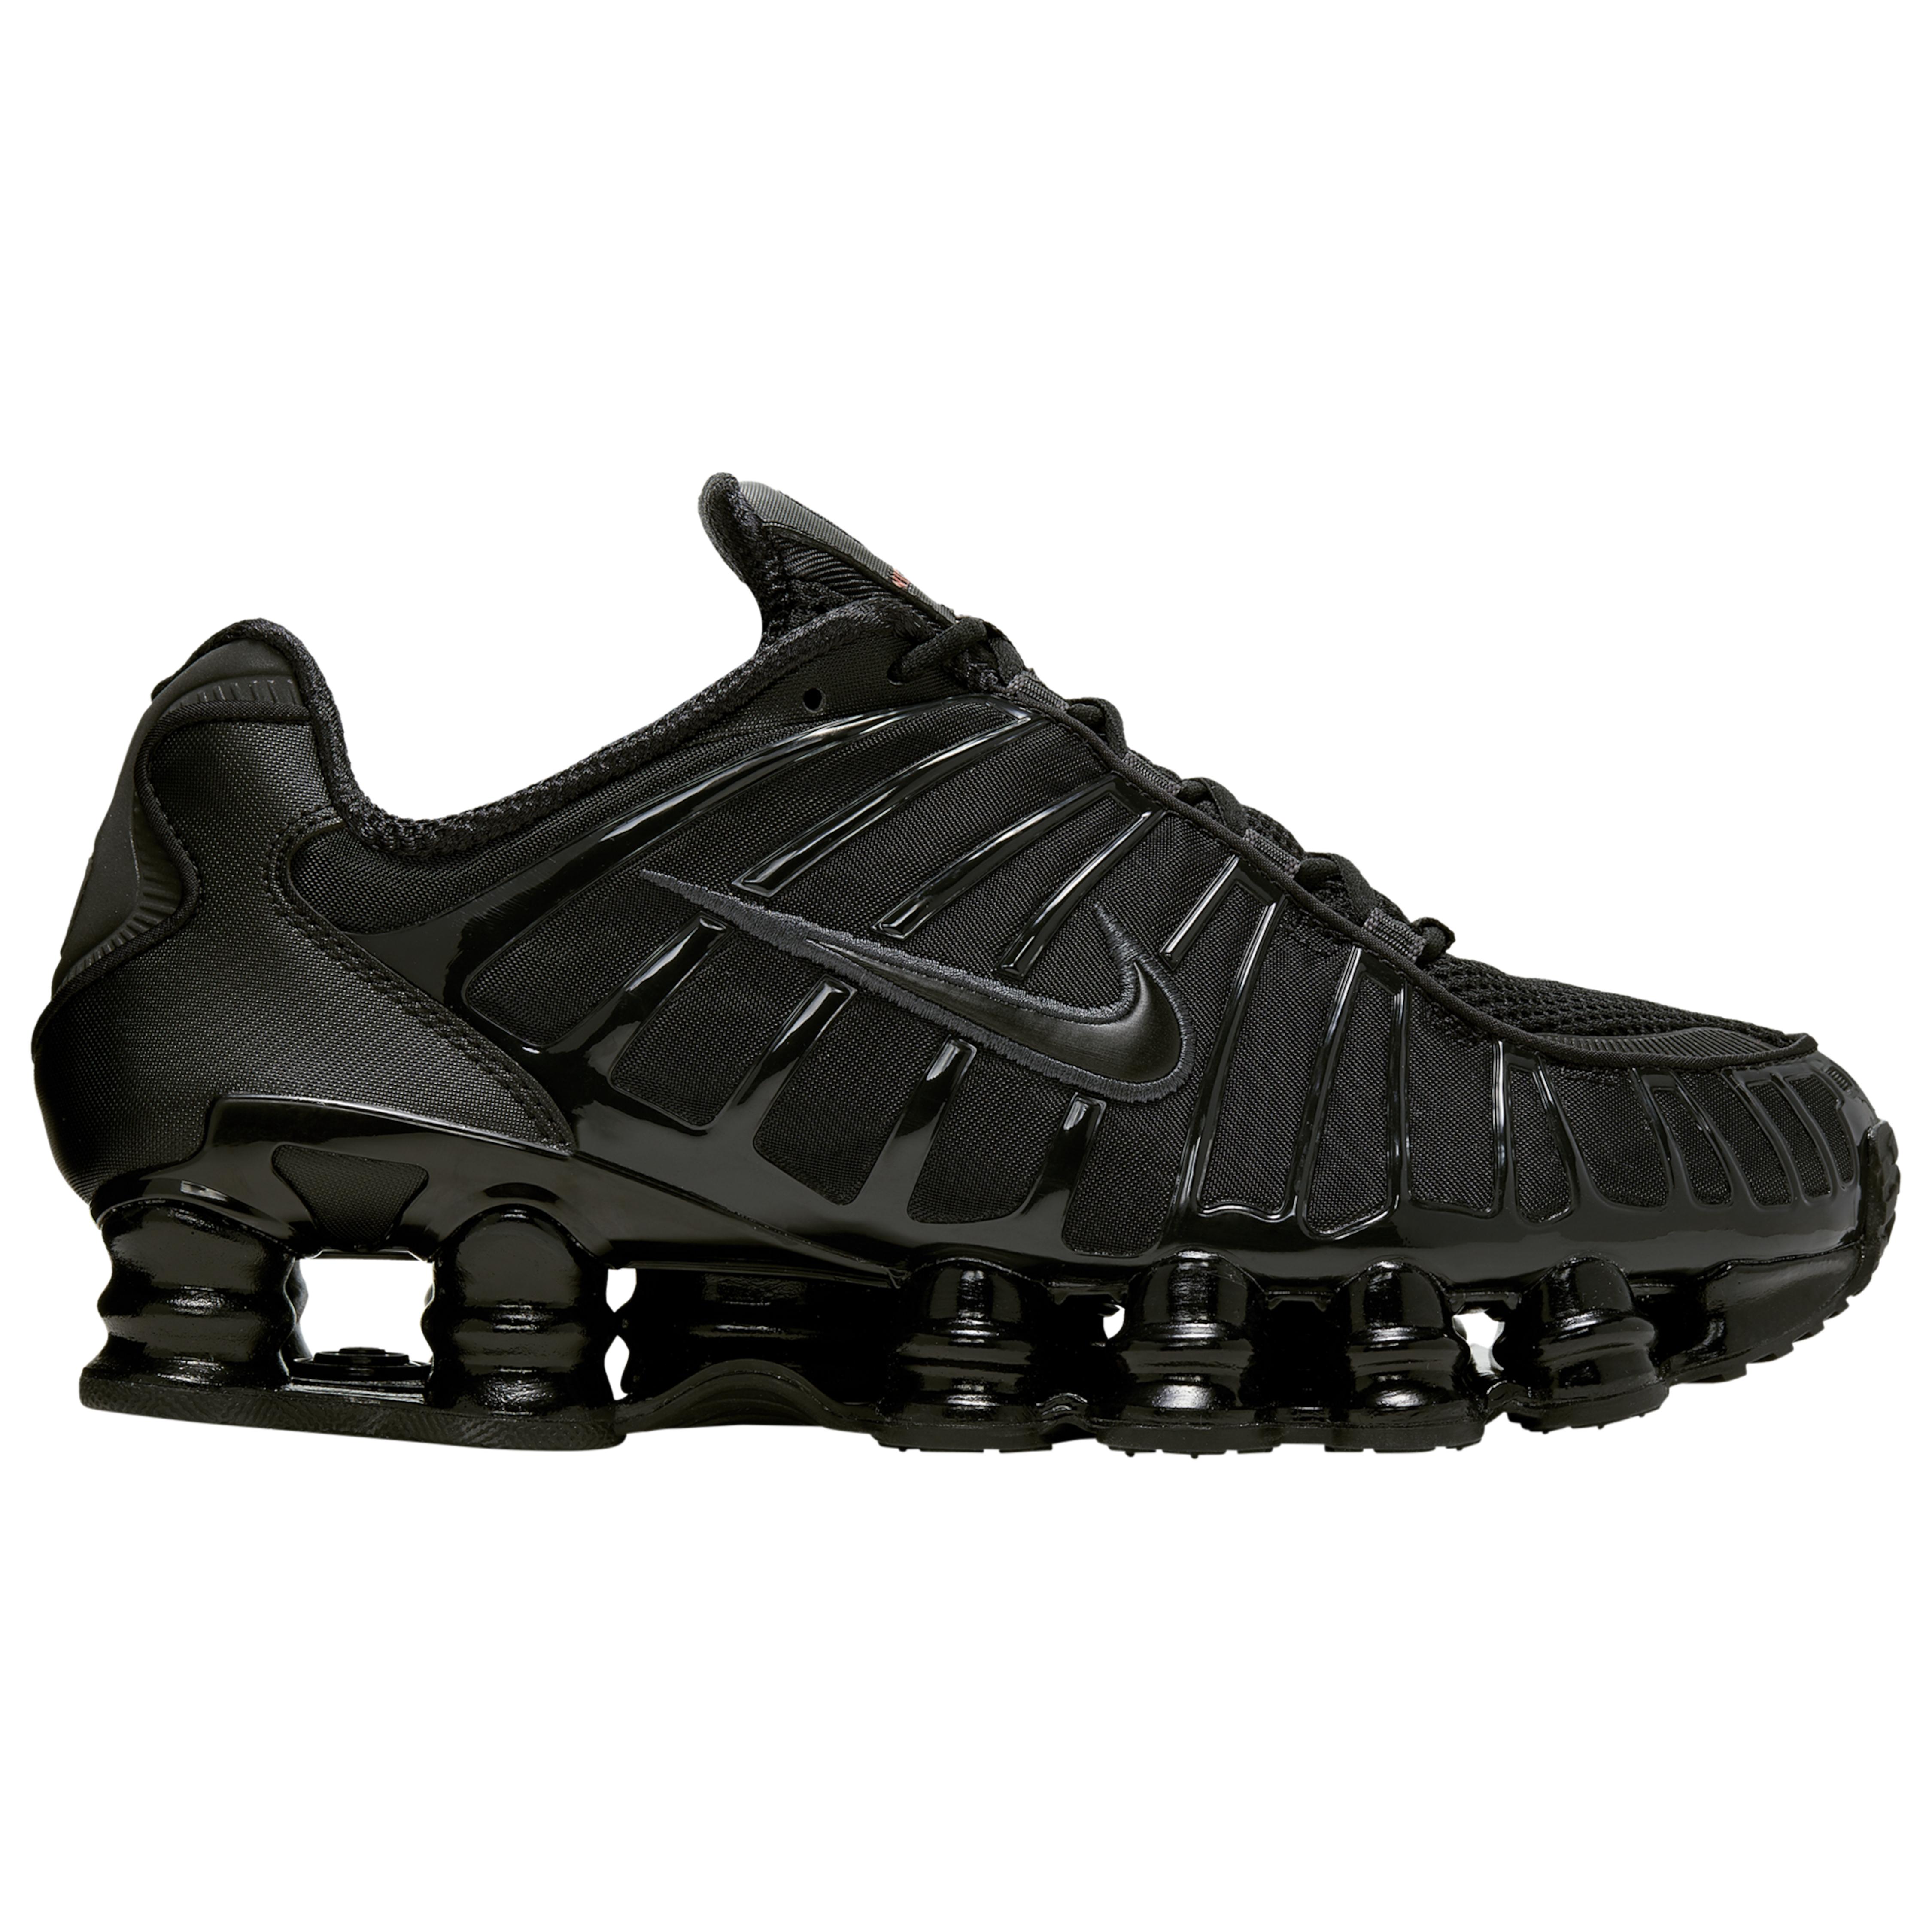 Nike Synthetic Shox Tl in Black/Black (Black) for Men - Lyst